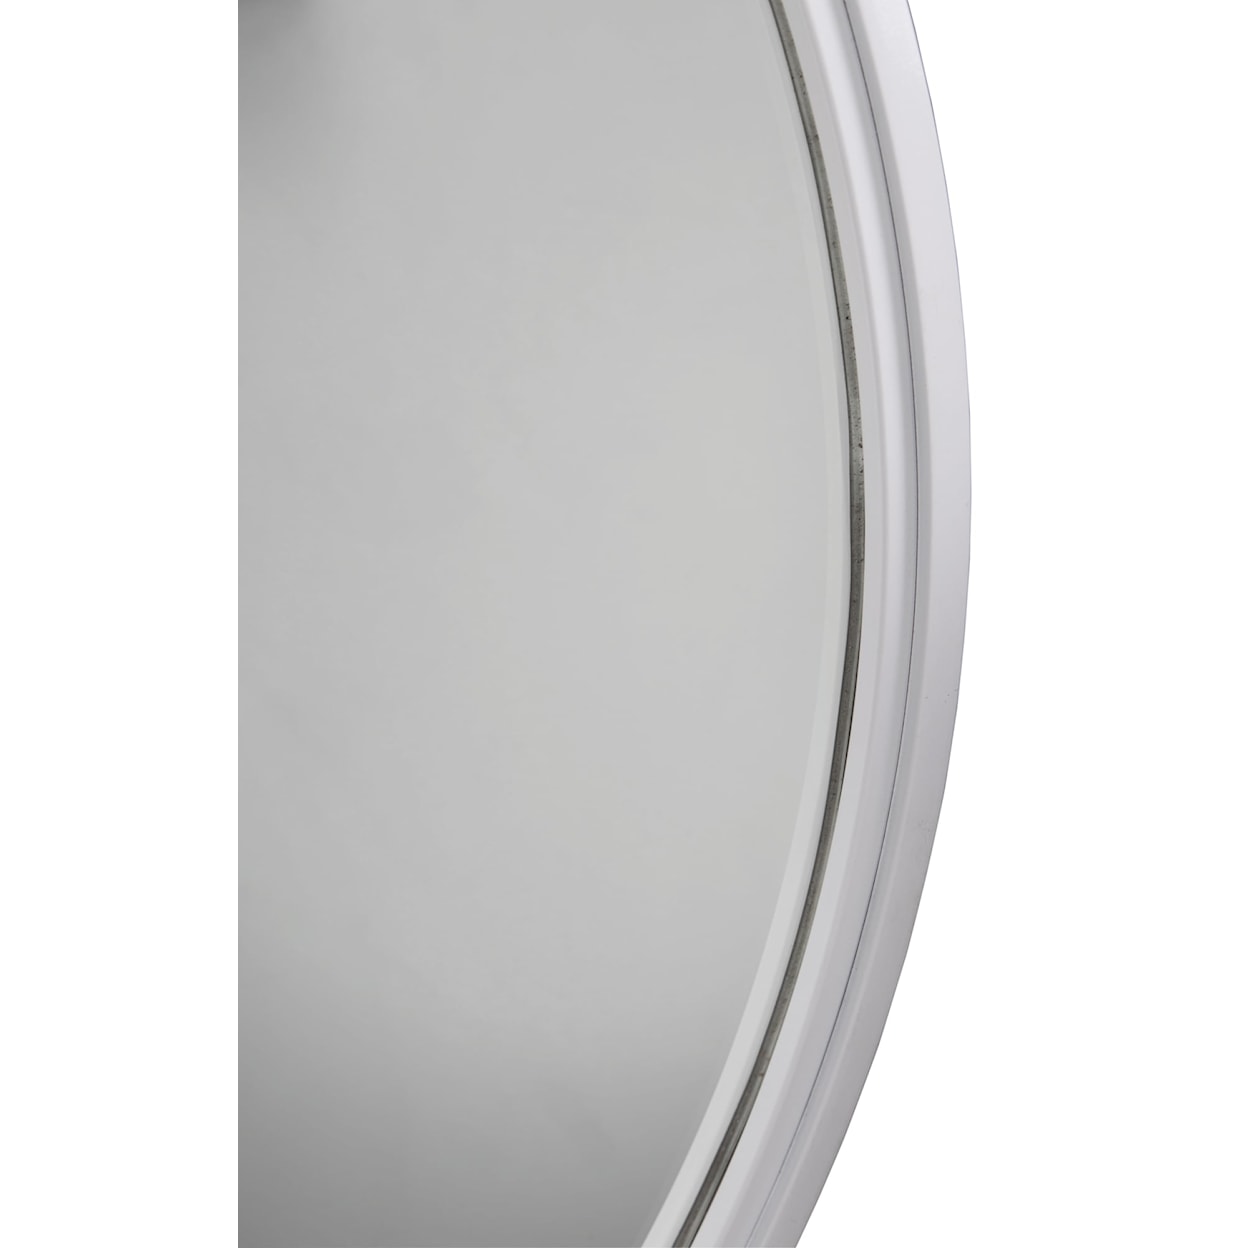 Ashley Furniture Signature Design Brocky Accent Mirror